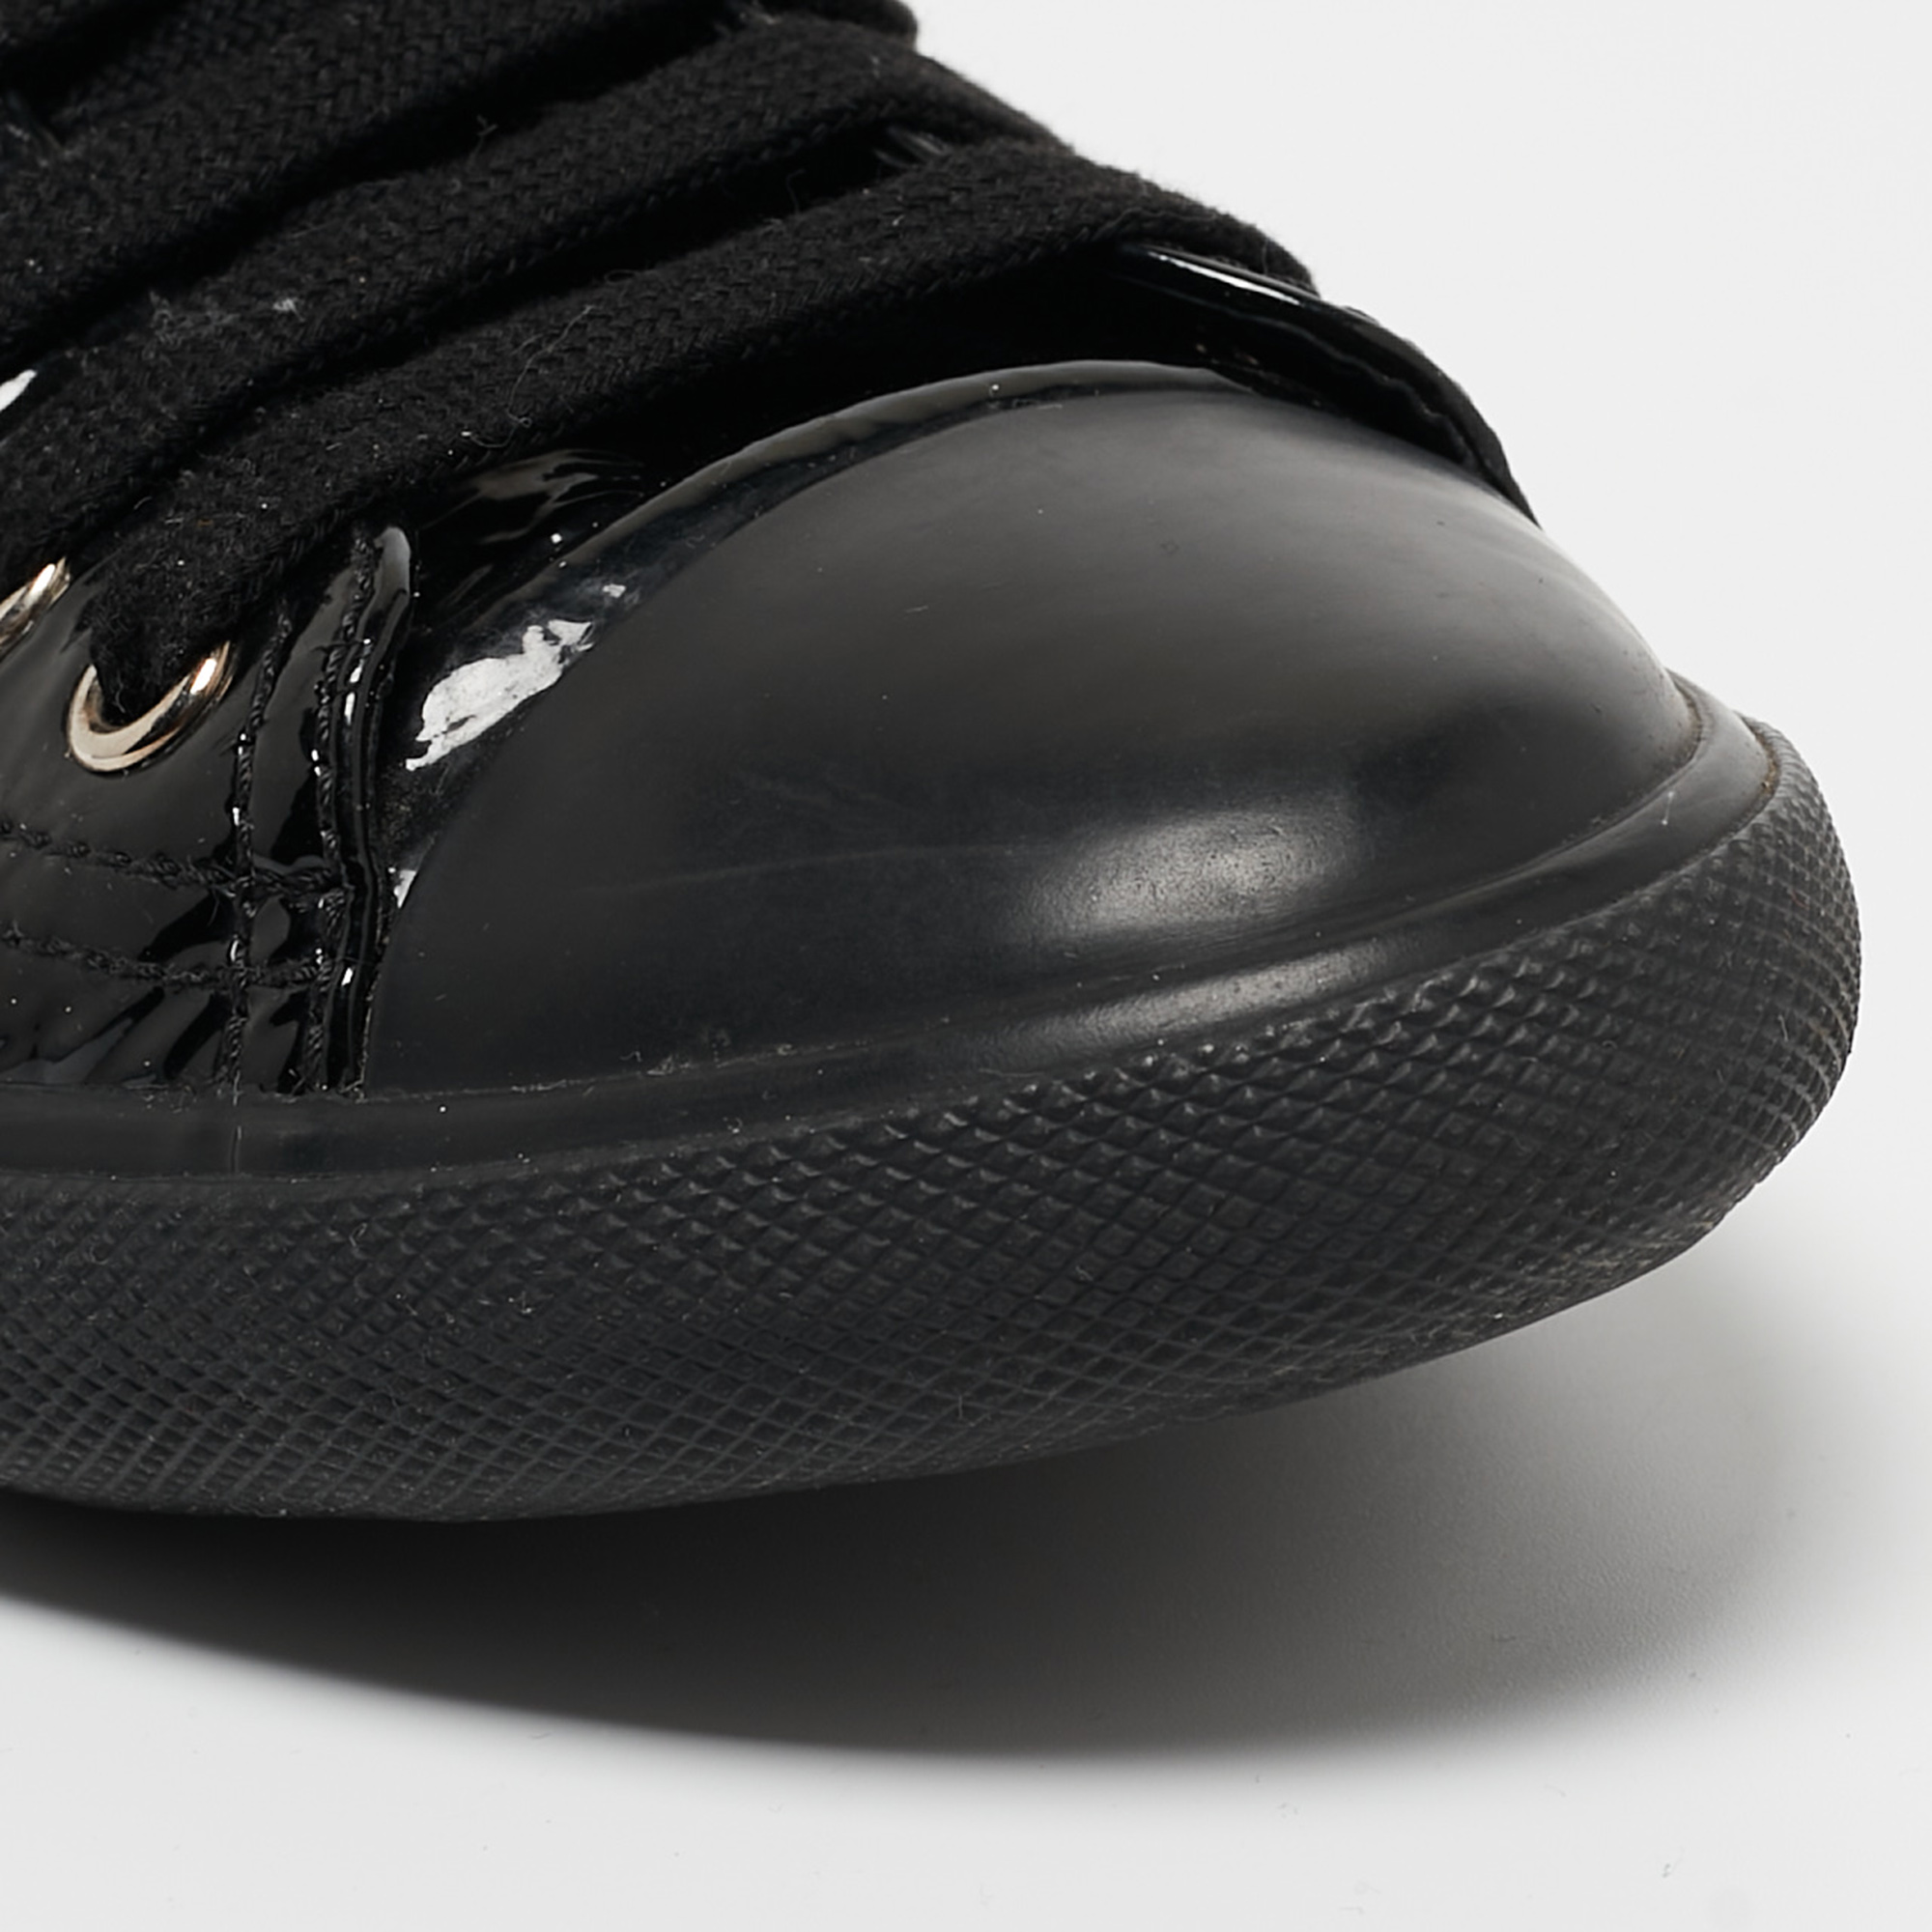 Prada Sport Black Patent High Top Sneakers Size 38